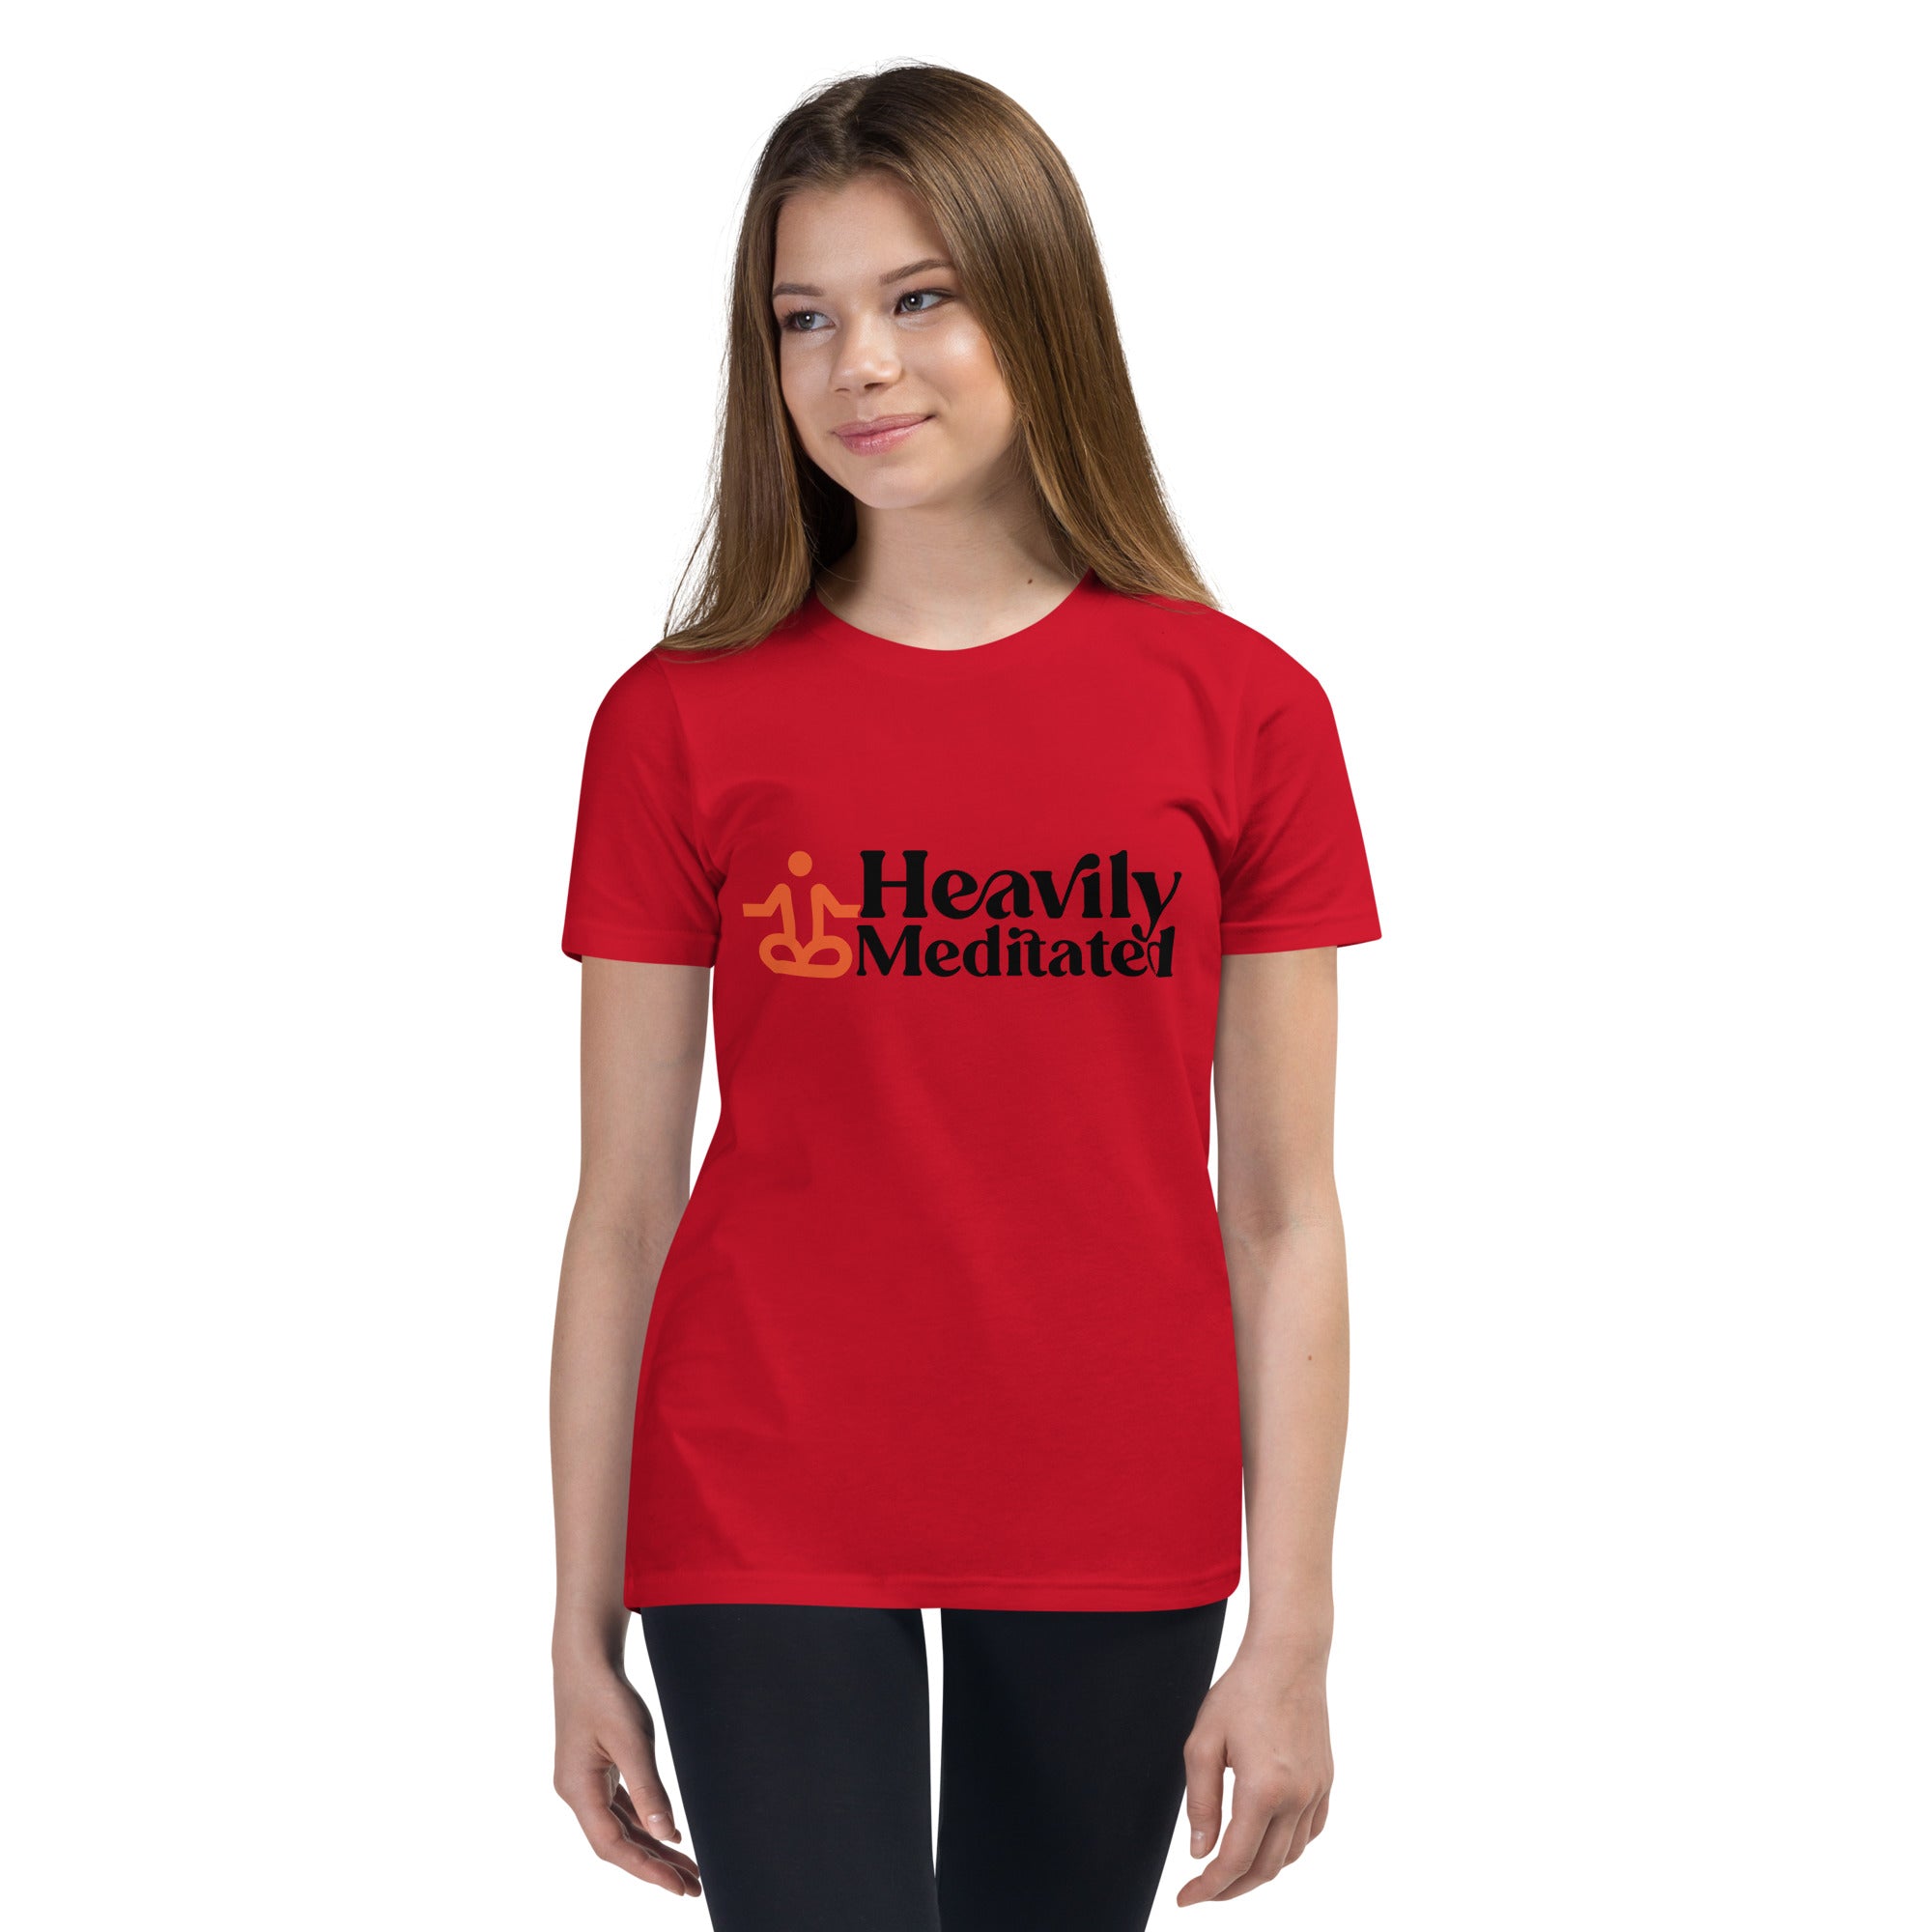 Heavily Meditated Kids Unisex T-Shirt